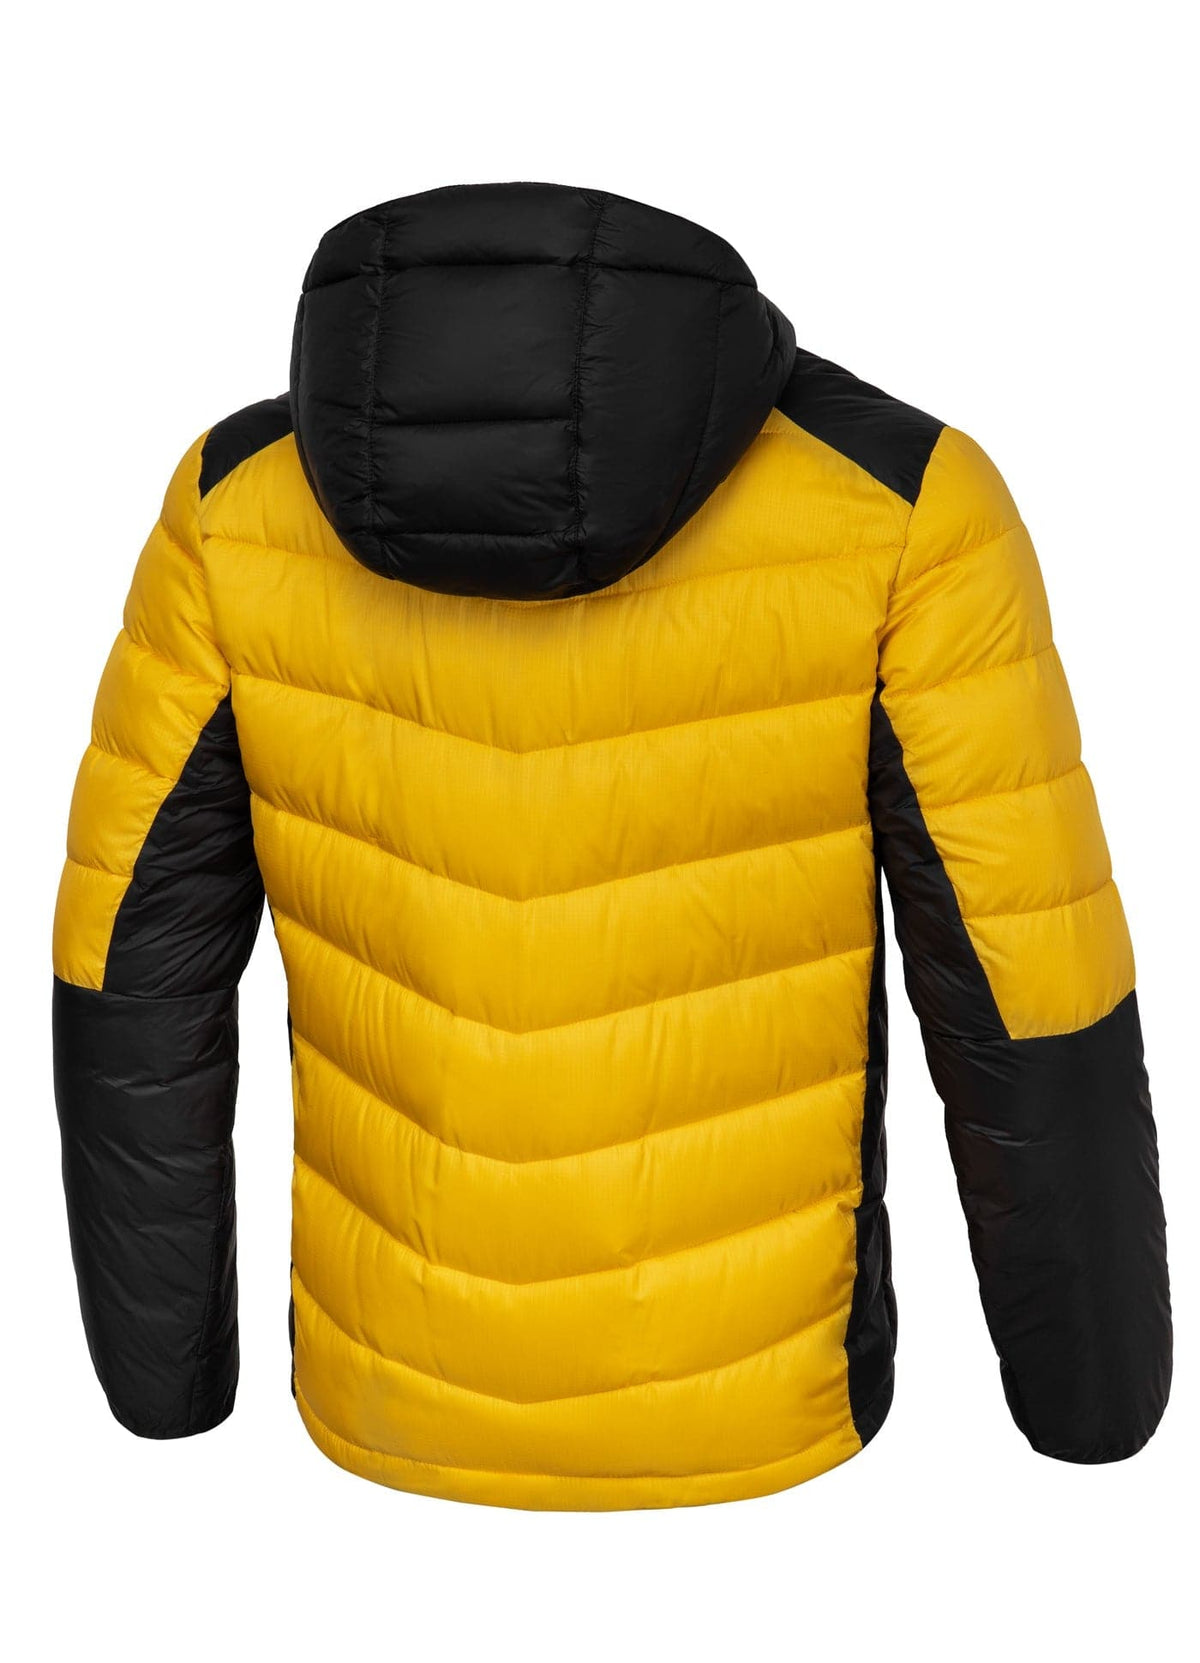 EVERGOLD Yellow Jacket